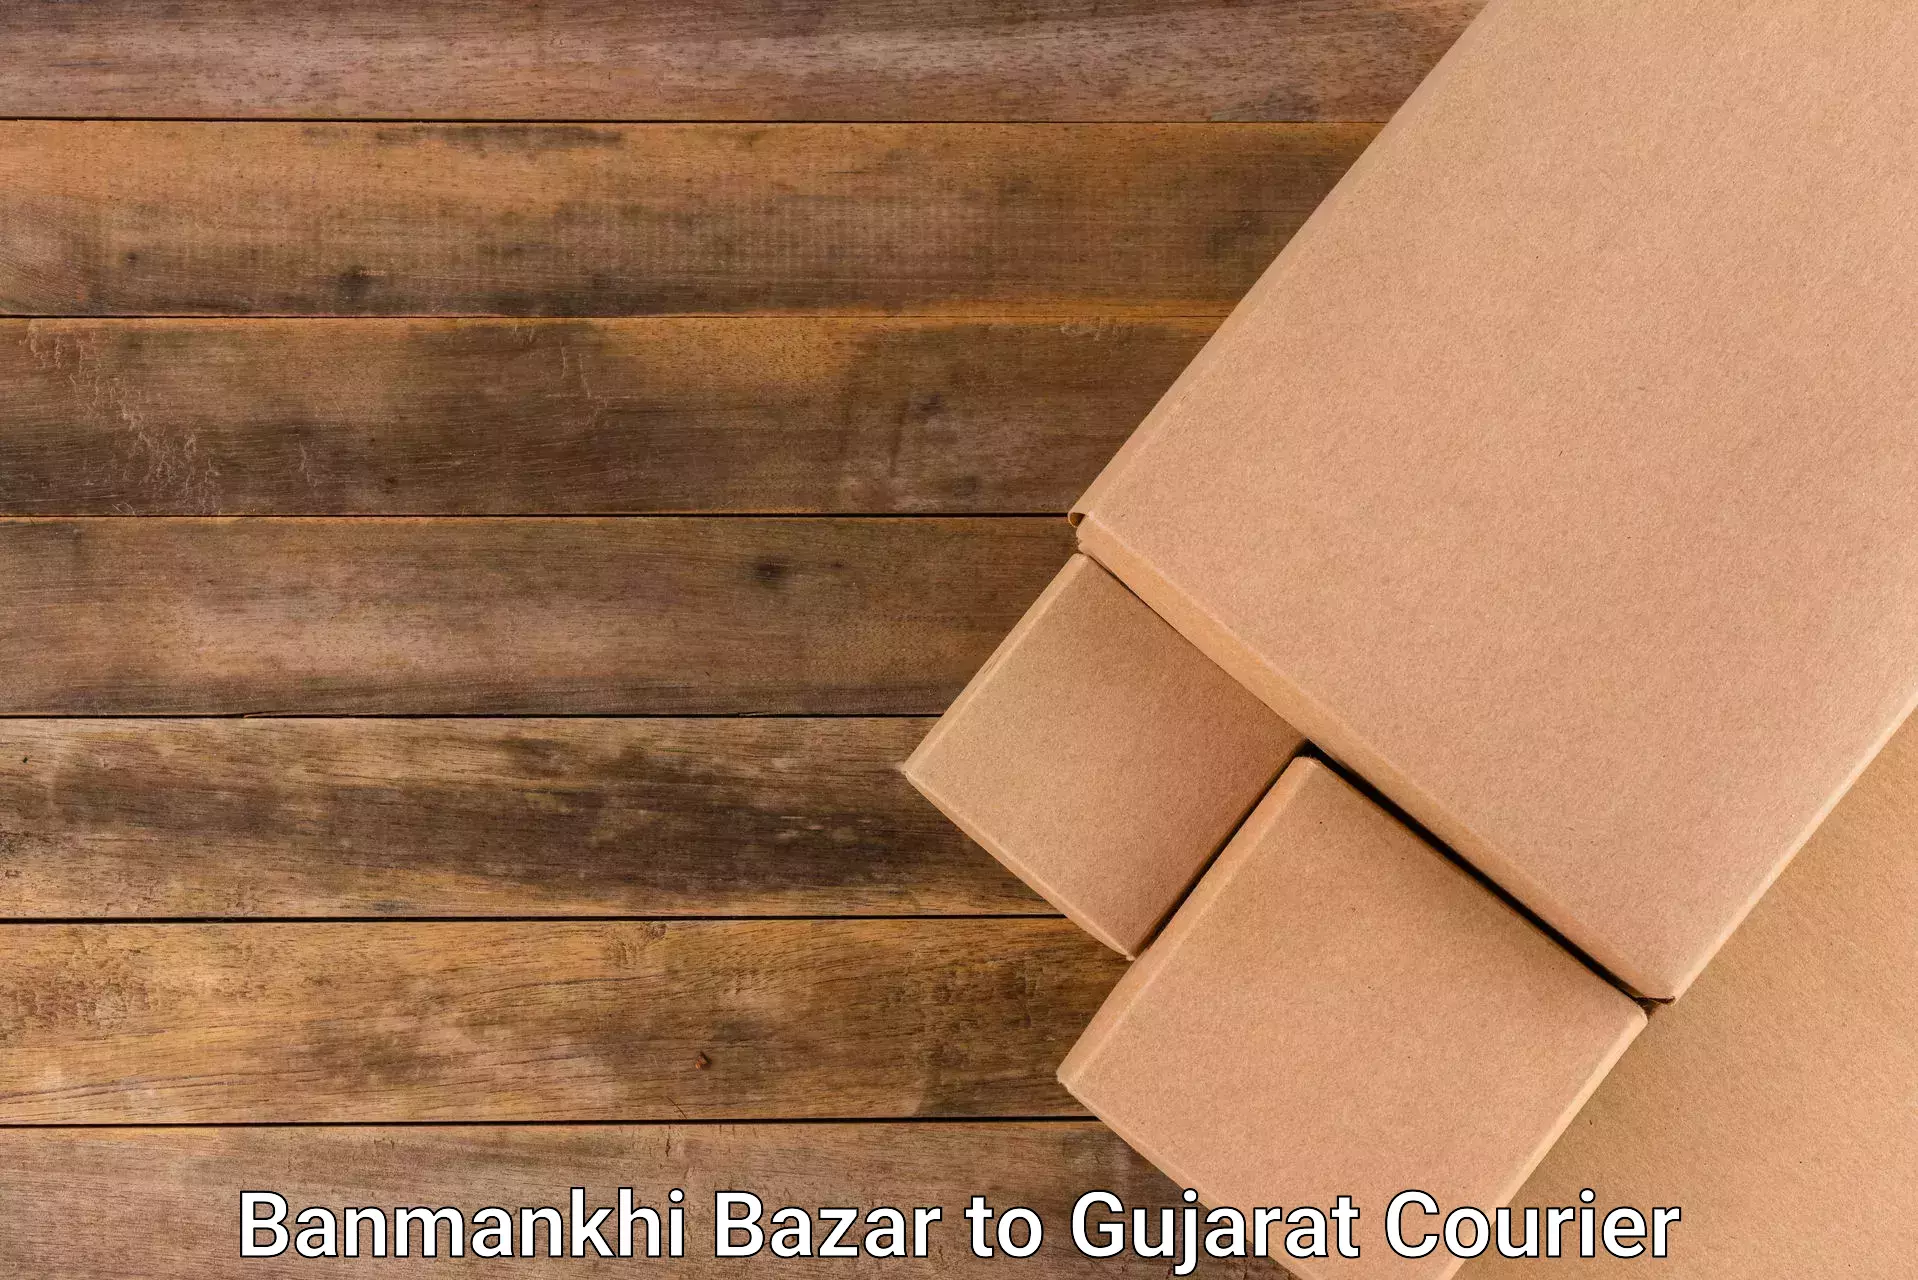 Express courier capabilities Banmankhi Bazar to Gujarat